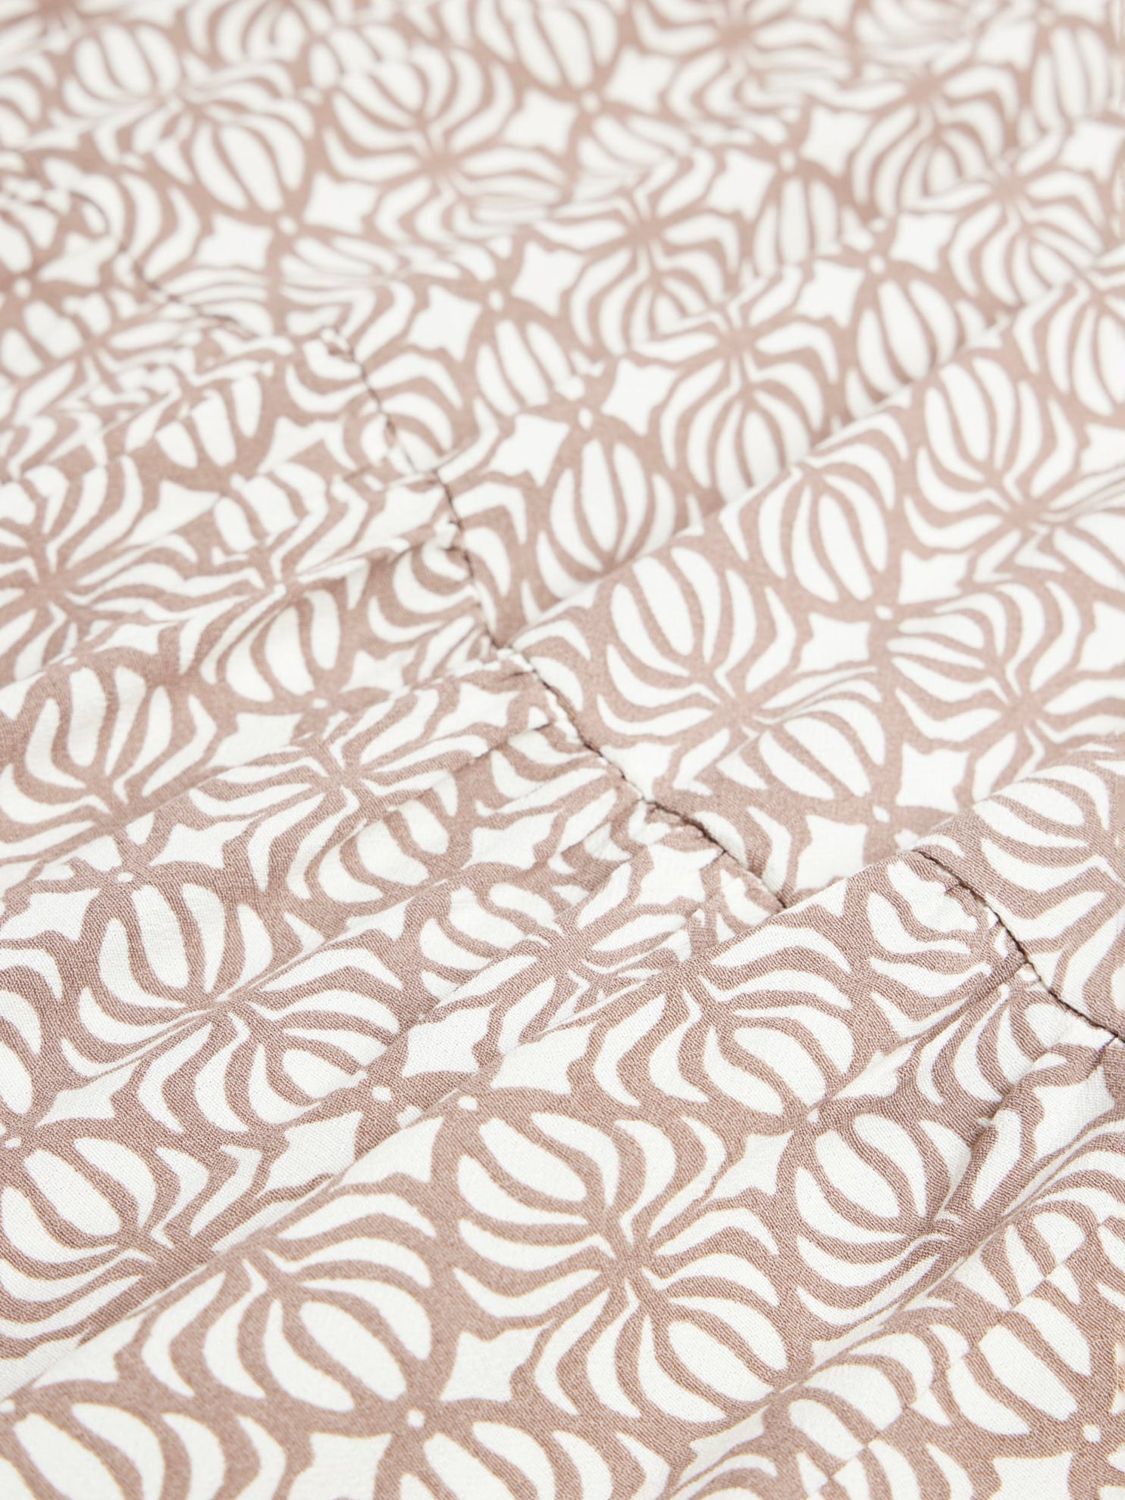 Mint Velvet Geometric Print Maxi Dress, Ivory/Brown, XS